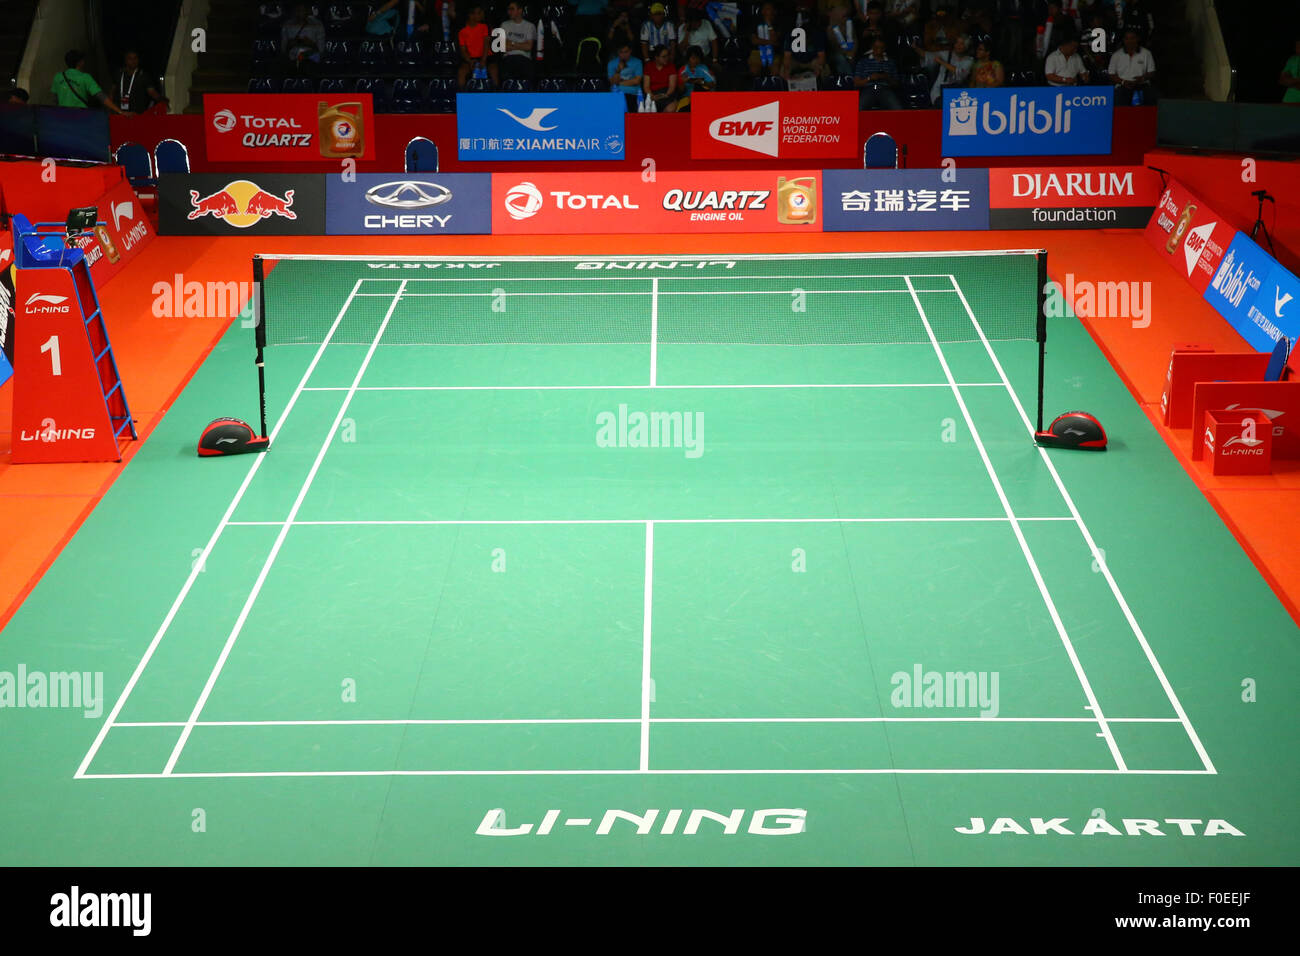 live badminton court 1